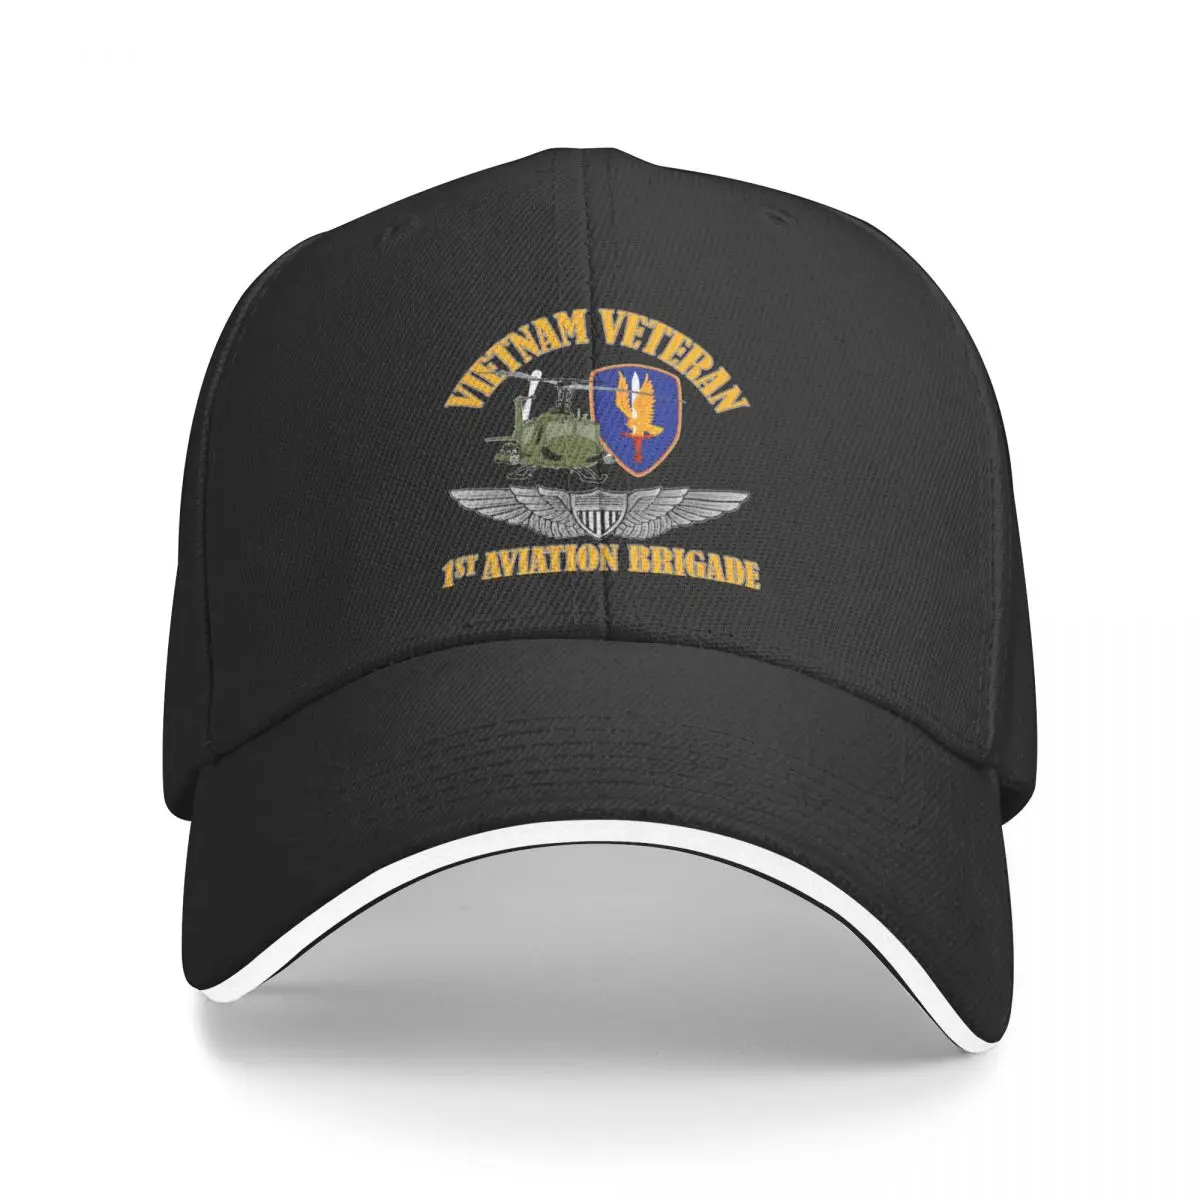 

New 1st Avn Bde Vietnam with Aviator Wings Baseball Cap dad hat Snap Back Hat Fashion Beach Mountaineering Men's Hats Women's